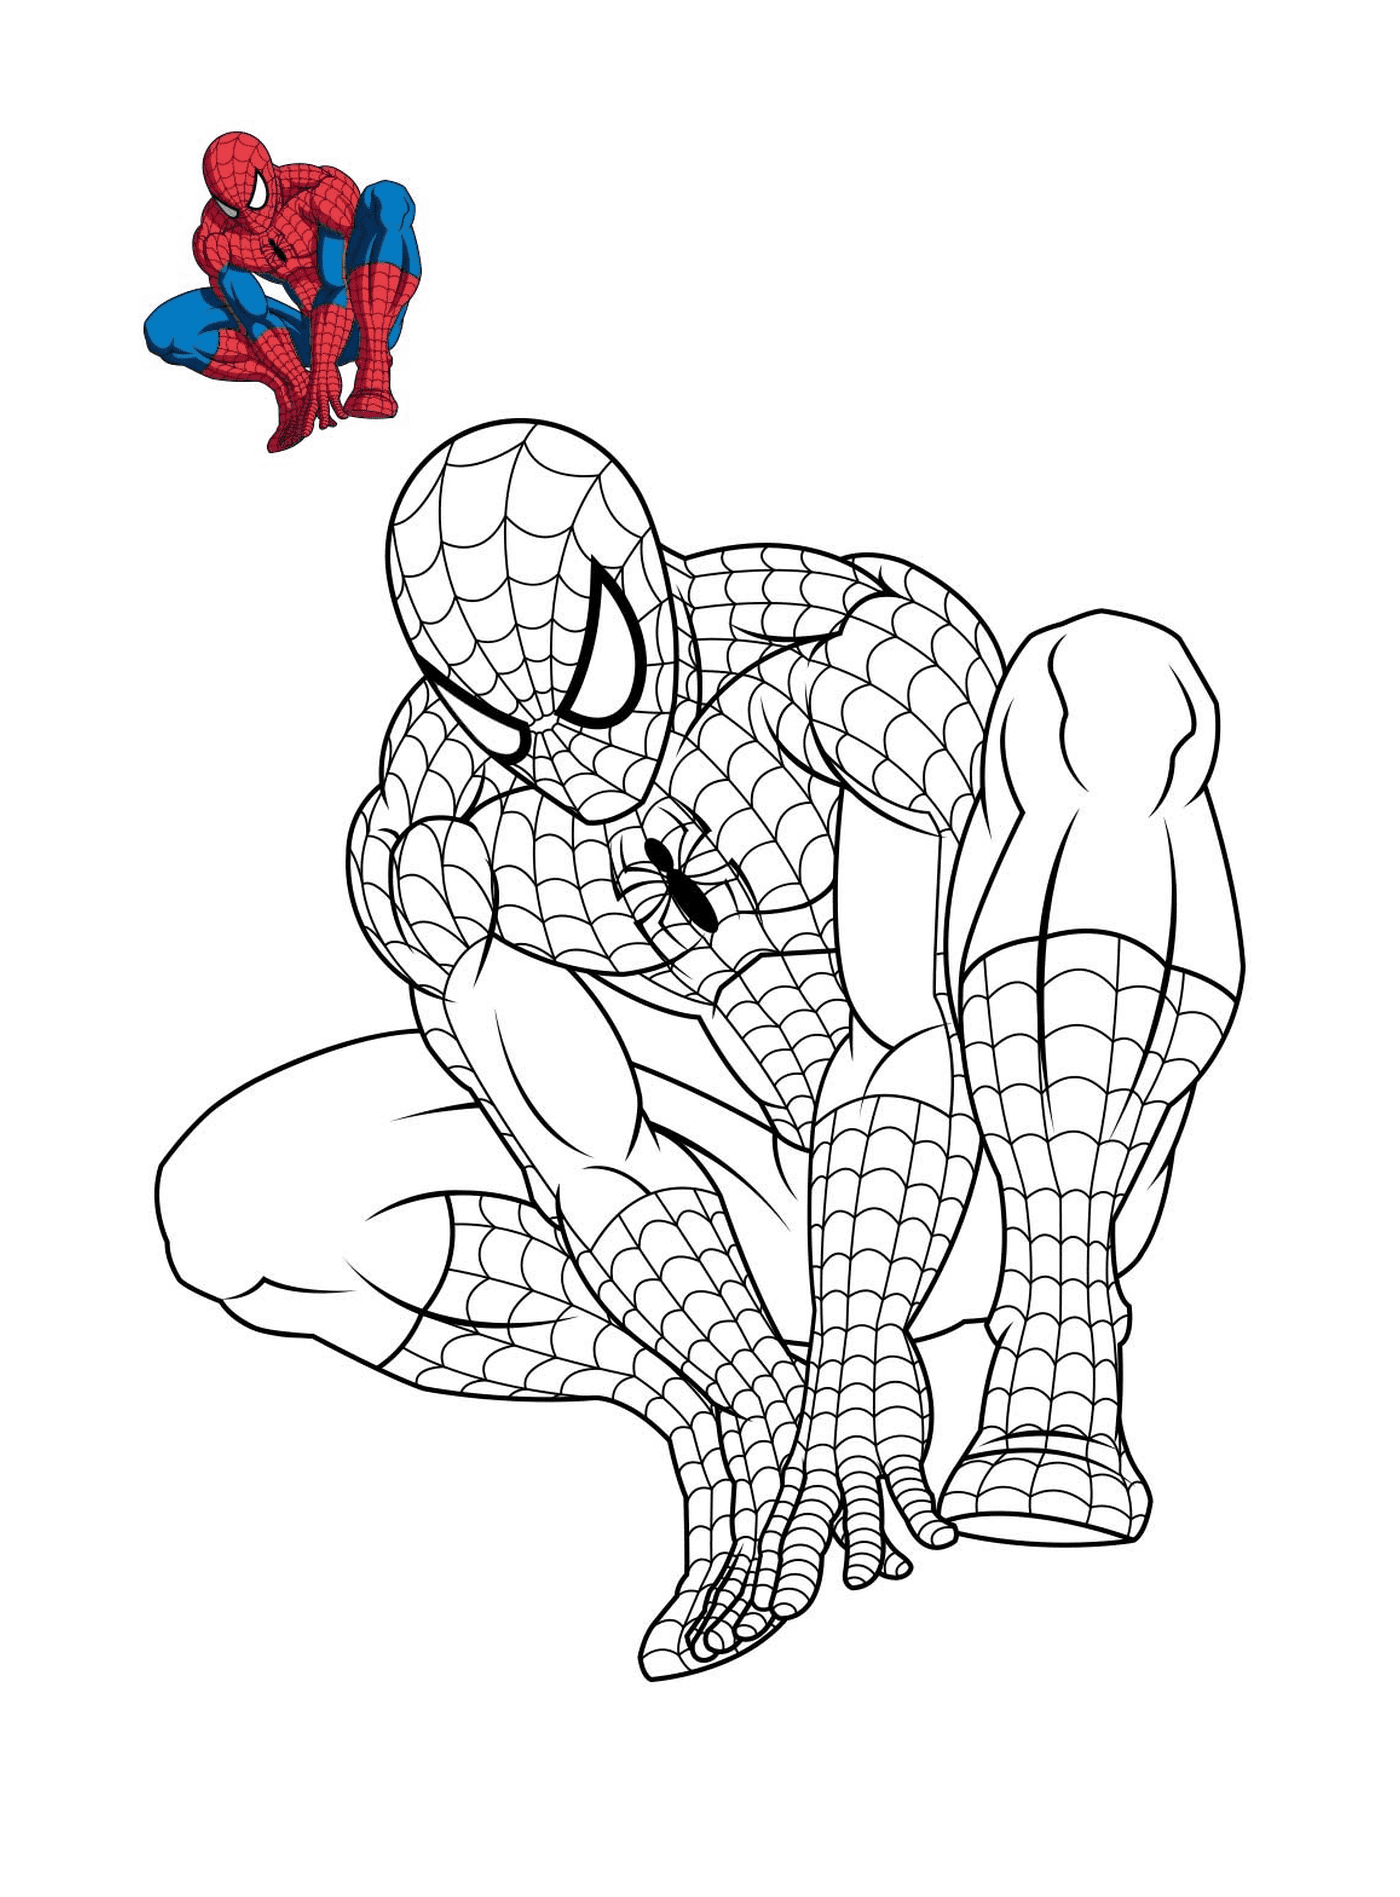  Spider-Man en reflexión 